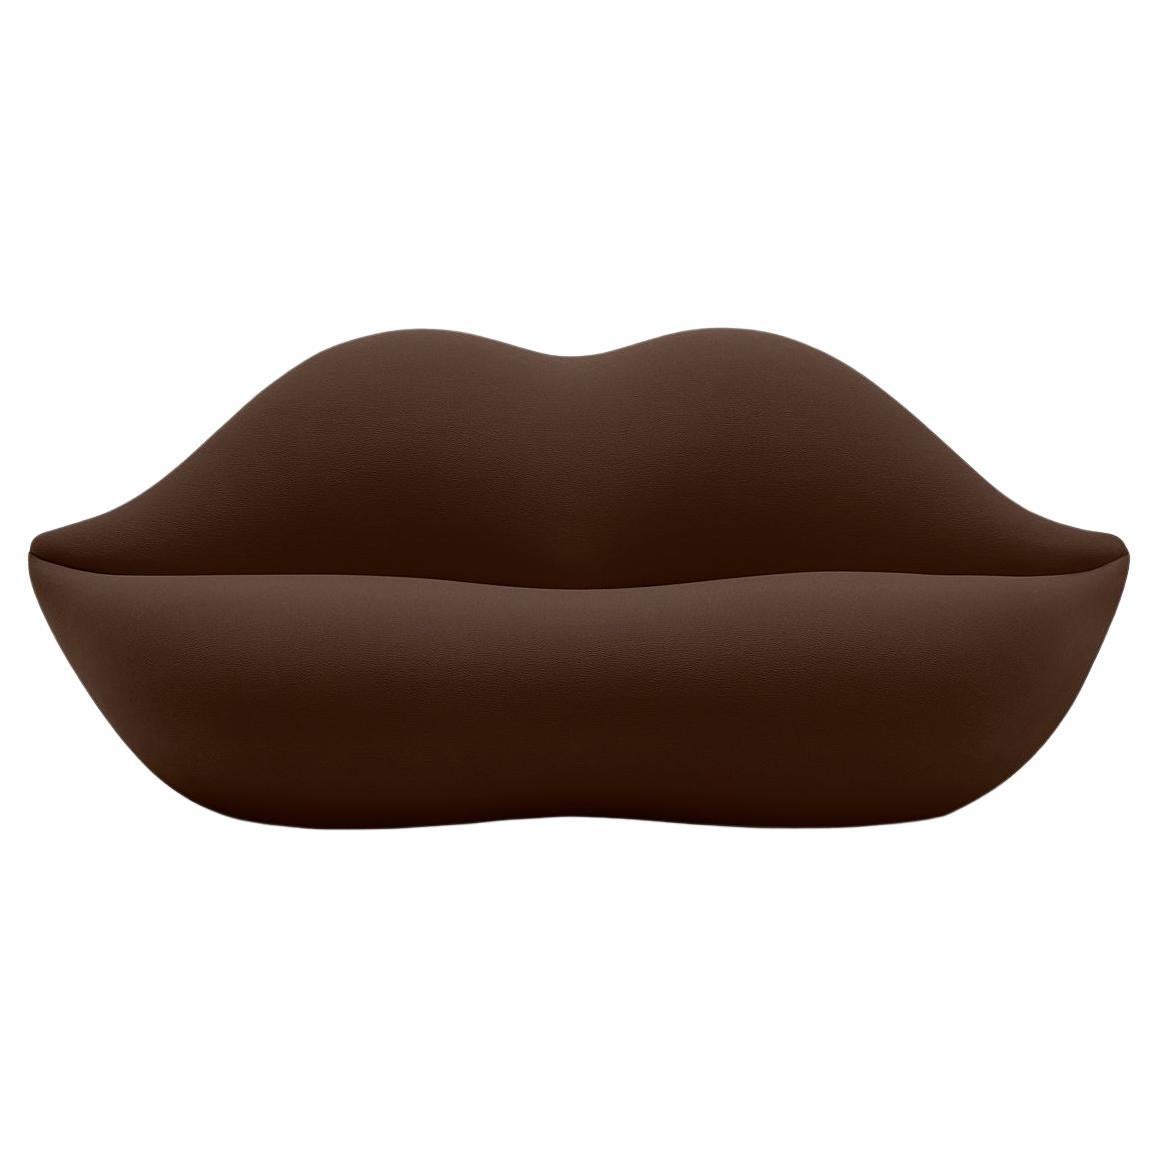 Gufram, canapé Bocca en forme de lèvres, chocolat, par Studio 65 en vente